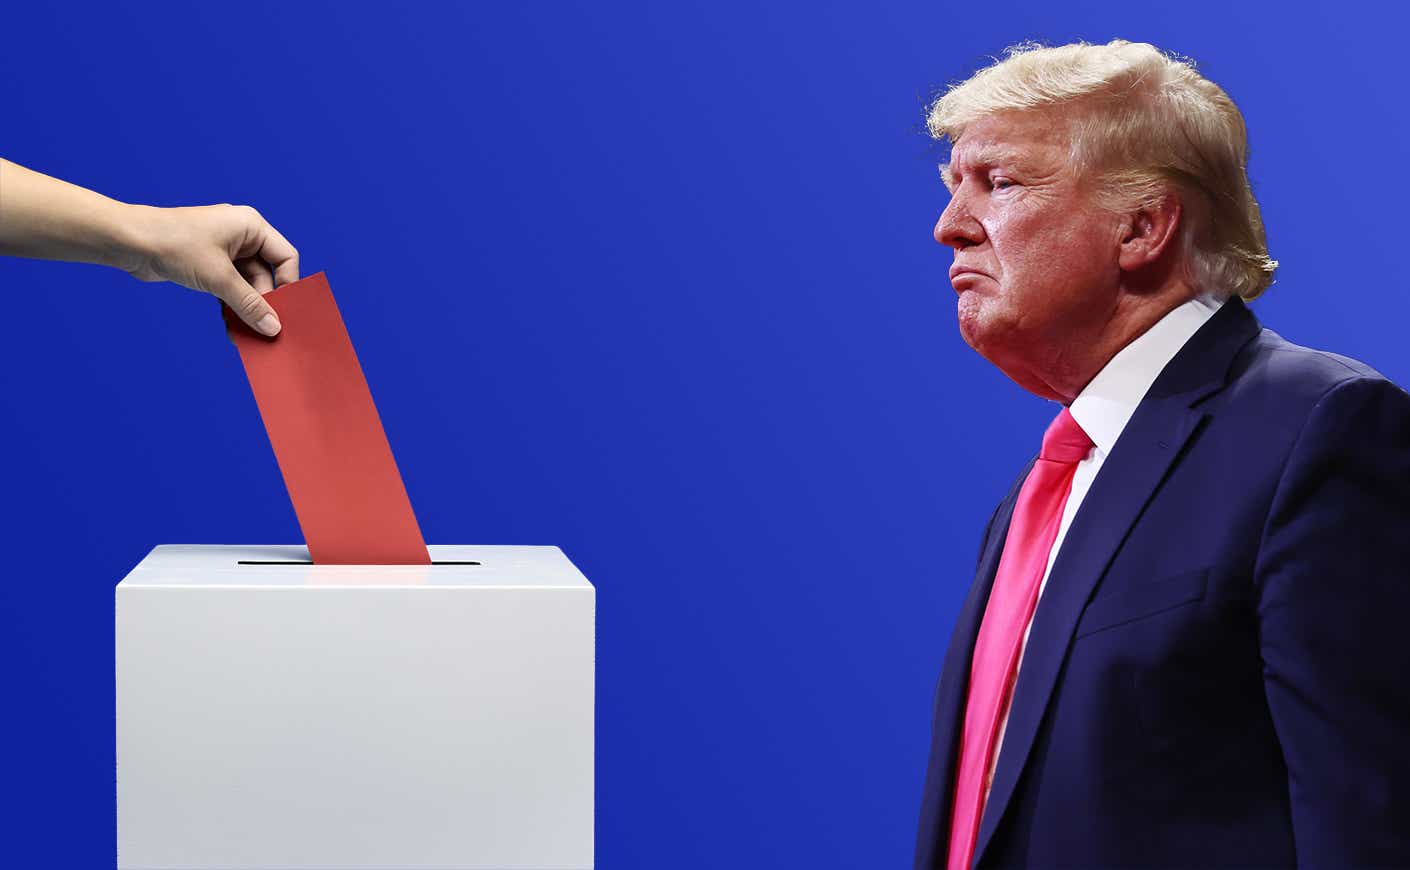 Donald Trump looking gruff and facing election ballot box